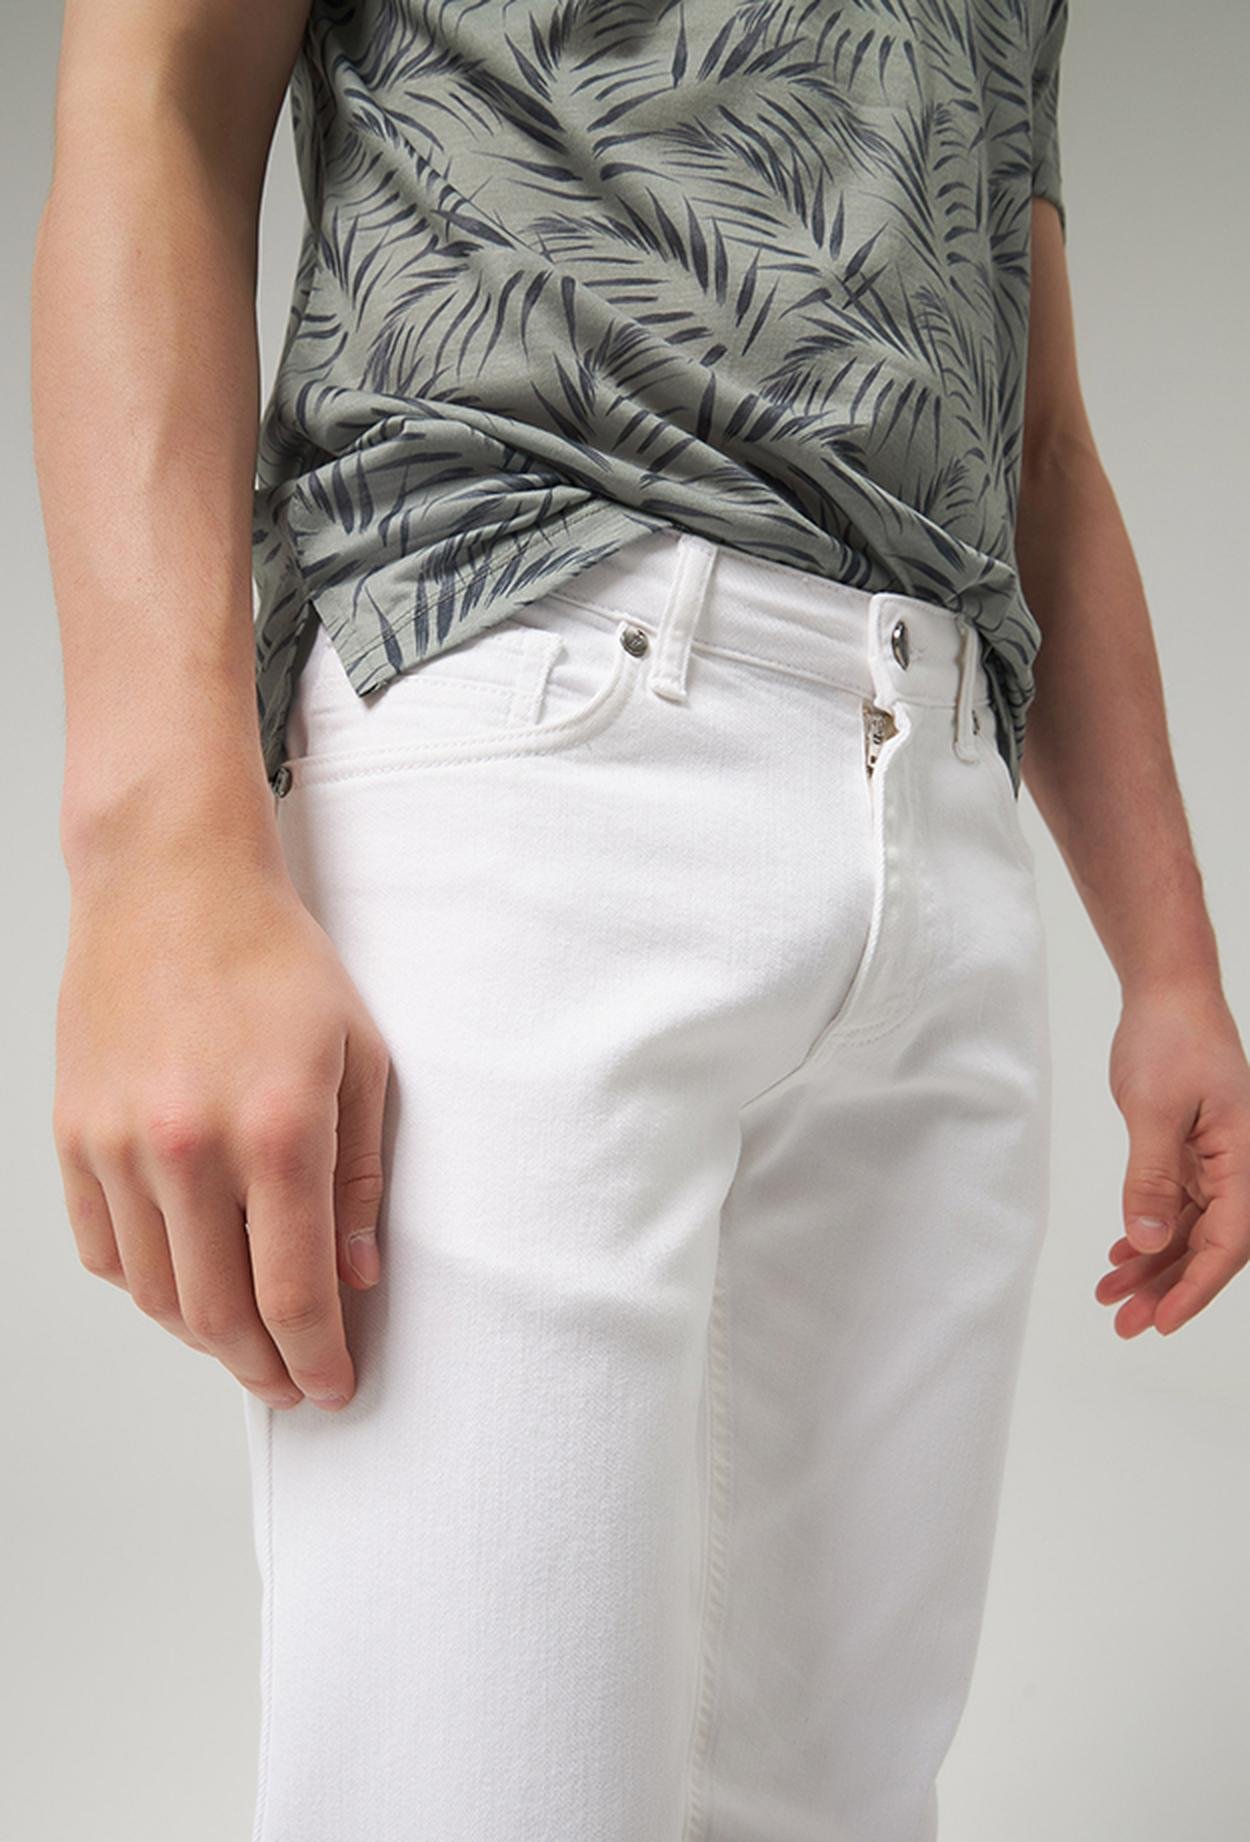 Twn Super Slim Fit Beyaz Armürlü Denim Pantolon